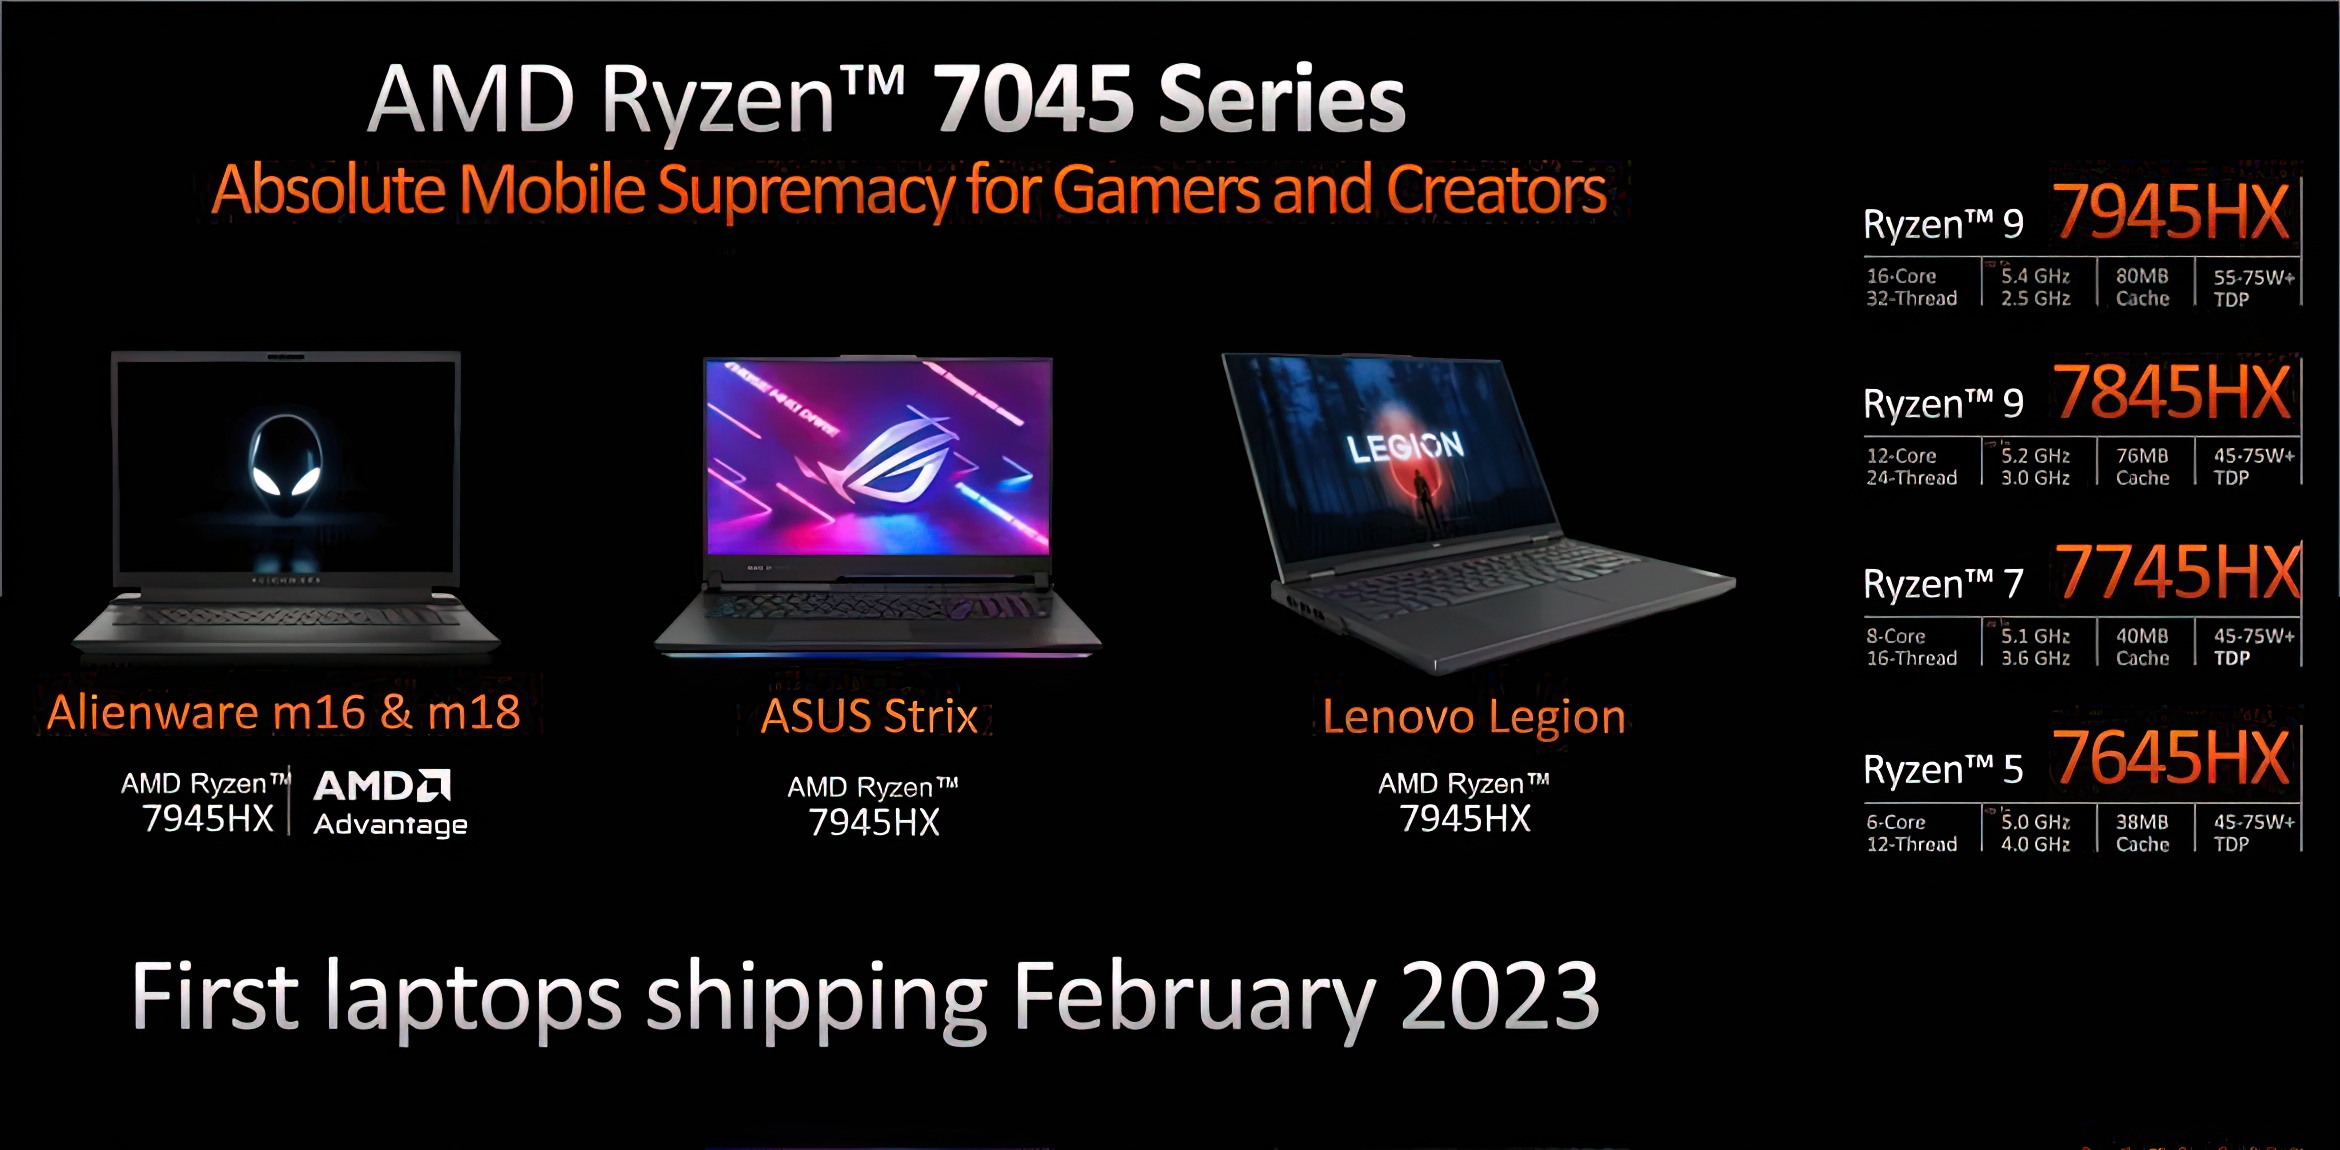 amd ryzen 7000 mobile ces 2023 5 เอเอ็มดีเปิดตัวซีพียู AMD Ryzen 7000 mobile series สถาปัตย์ Zen4 ขนาด 5nm ใหม่ล่าสุดถึง 5รุ่น รุ่นท็อป Ryzen 9 7945HX 16C/32T ความเร็ว 5.4Ghz 